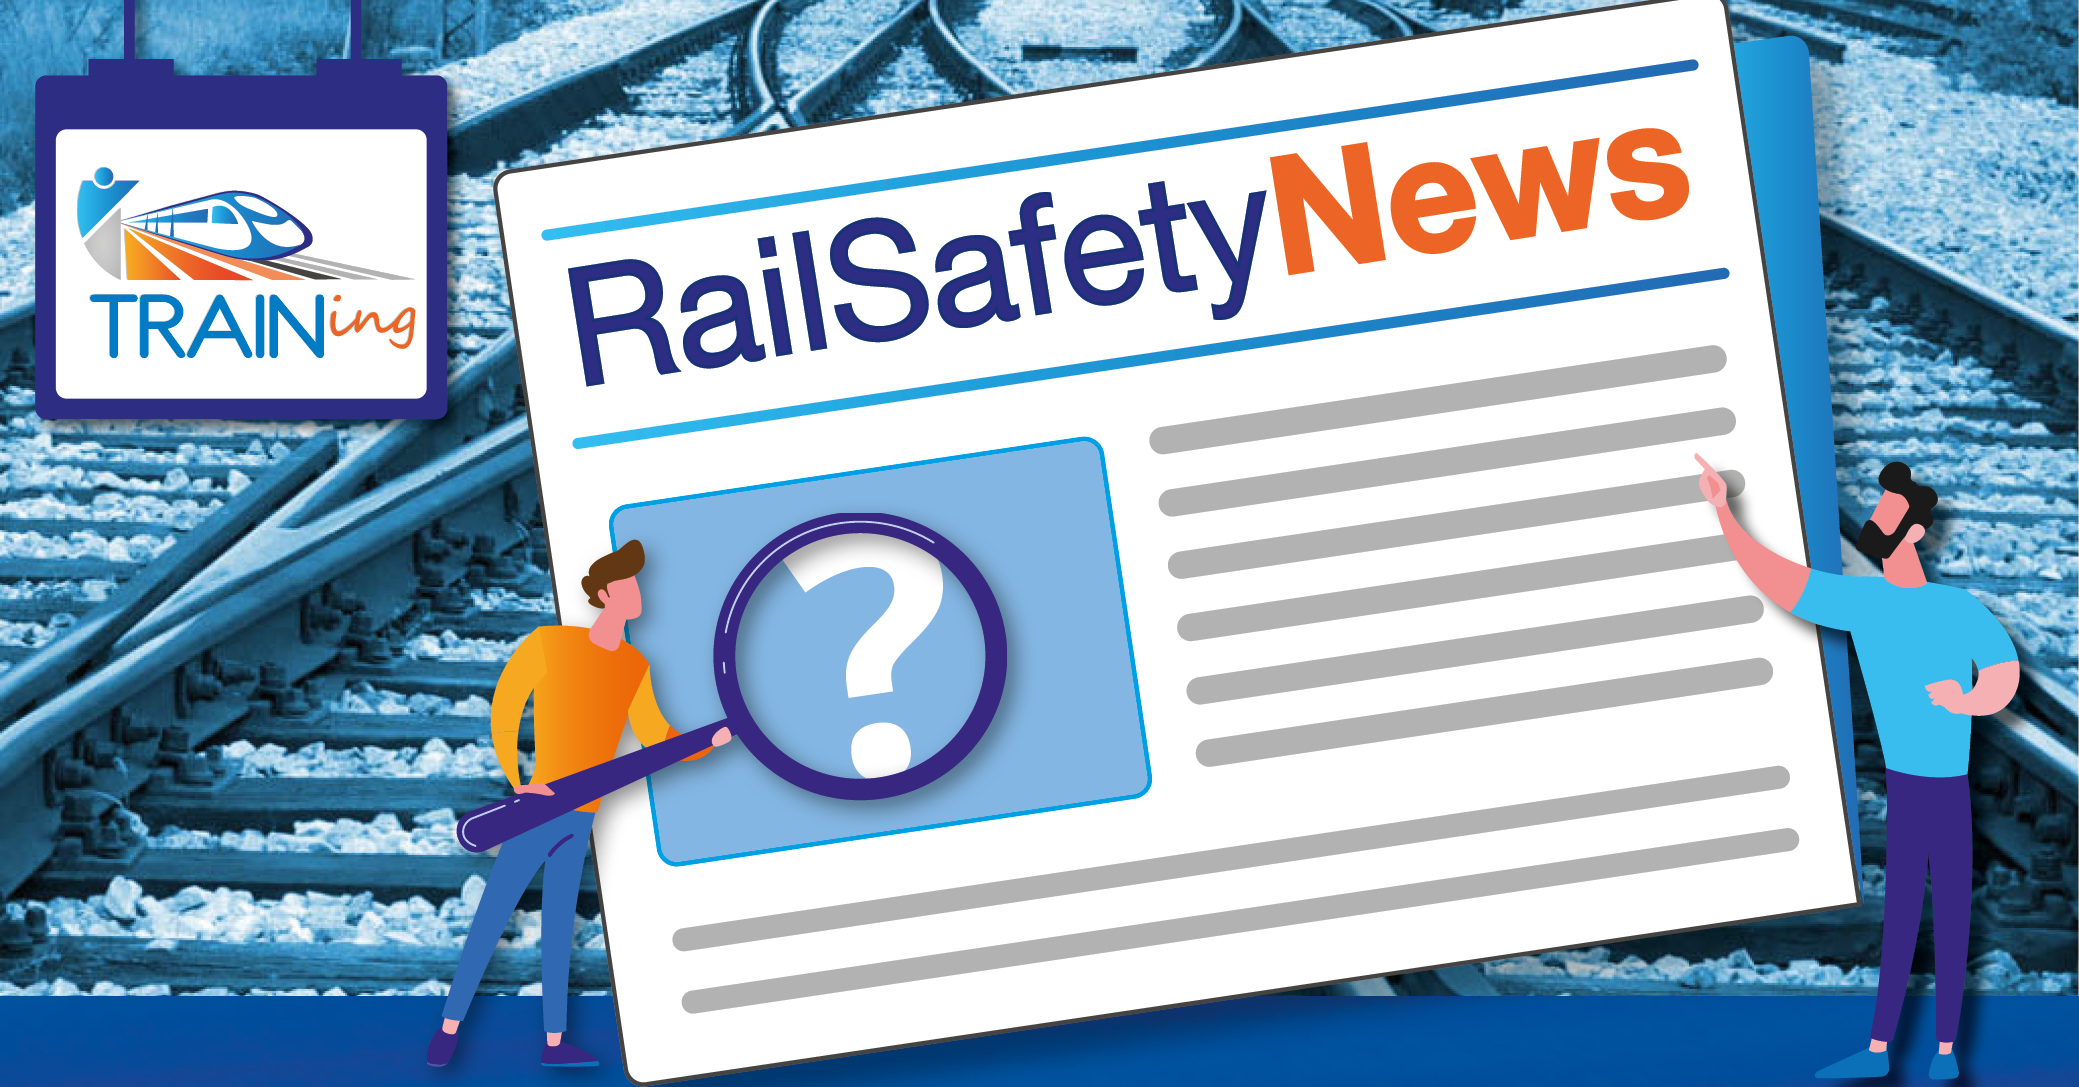 RailSafetyNews